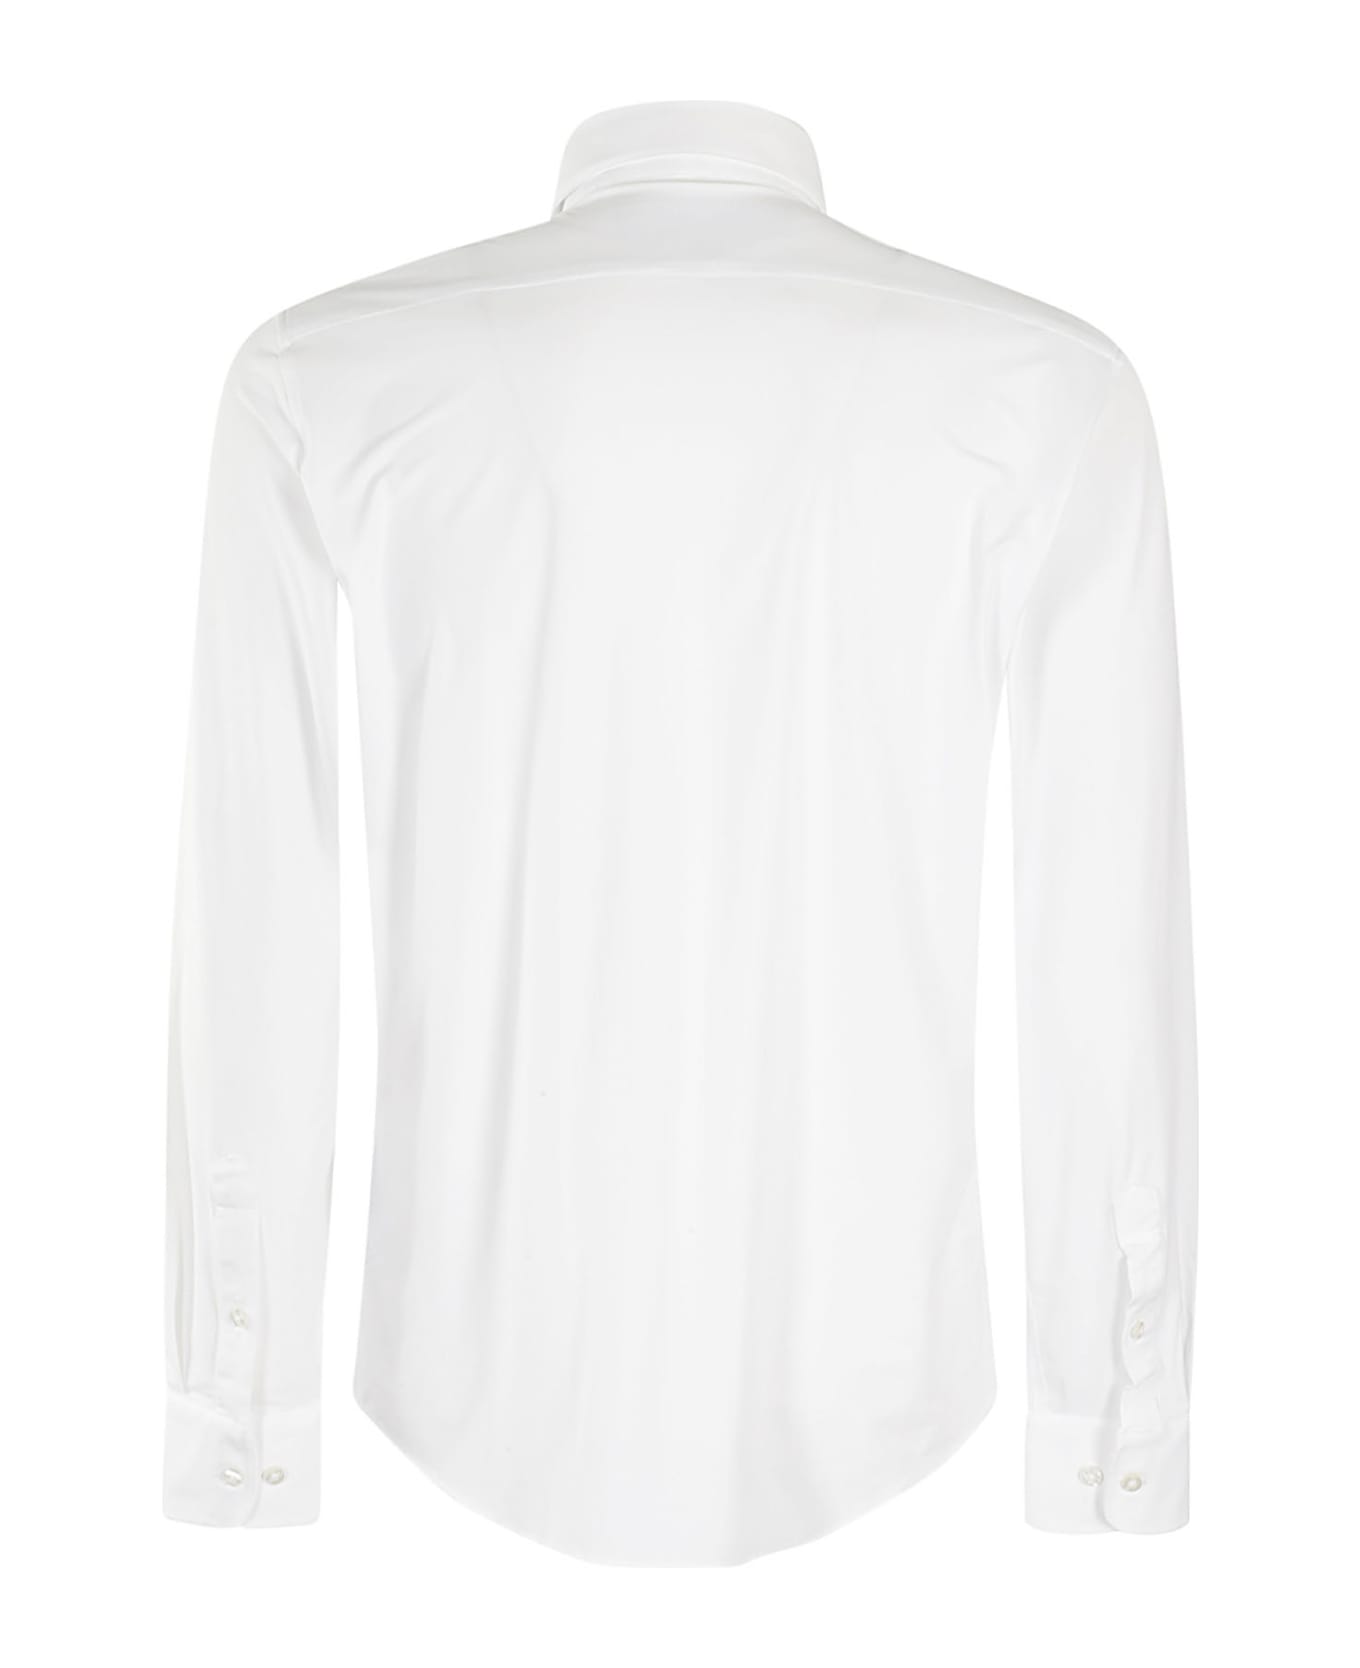 RRD - Roberto Ricci Design Oxford Shirt - Bianco シャツ